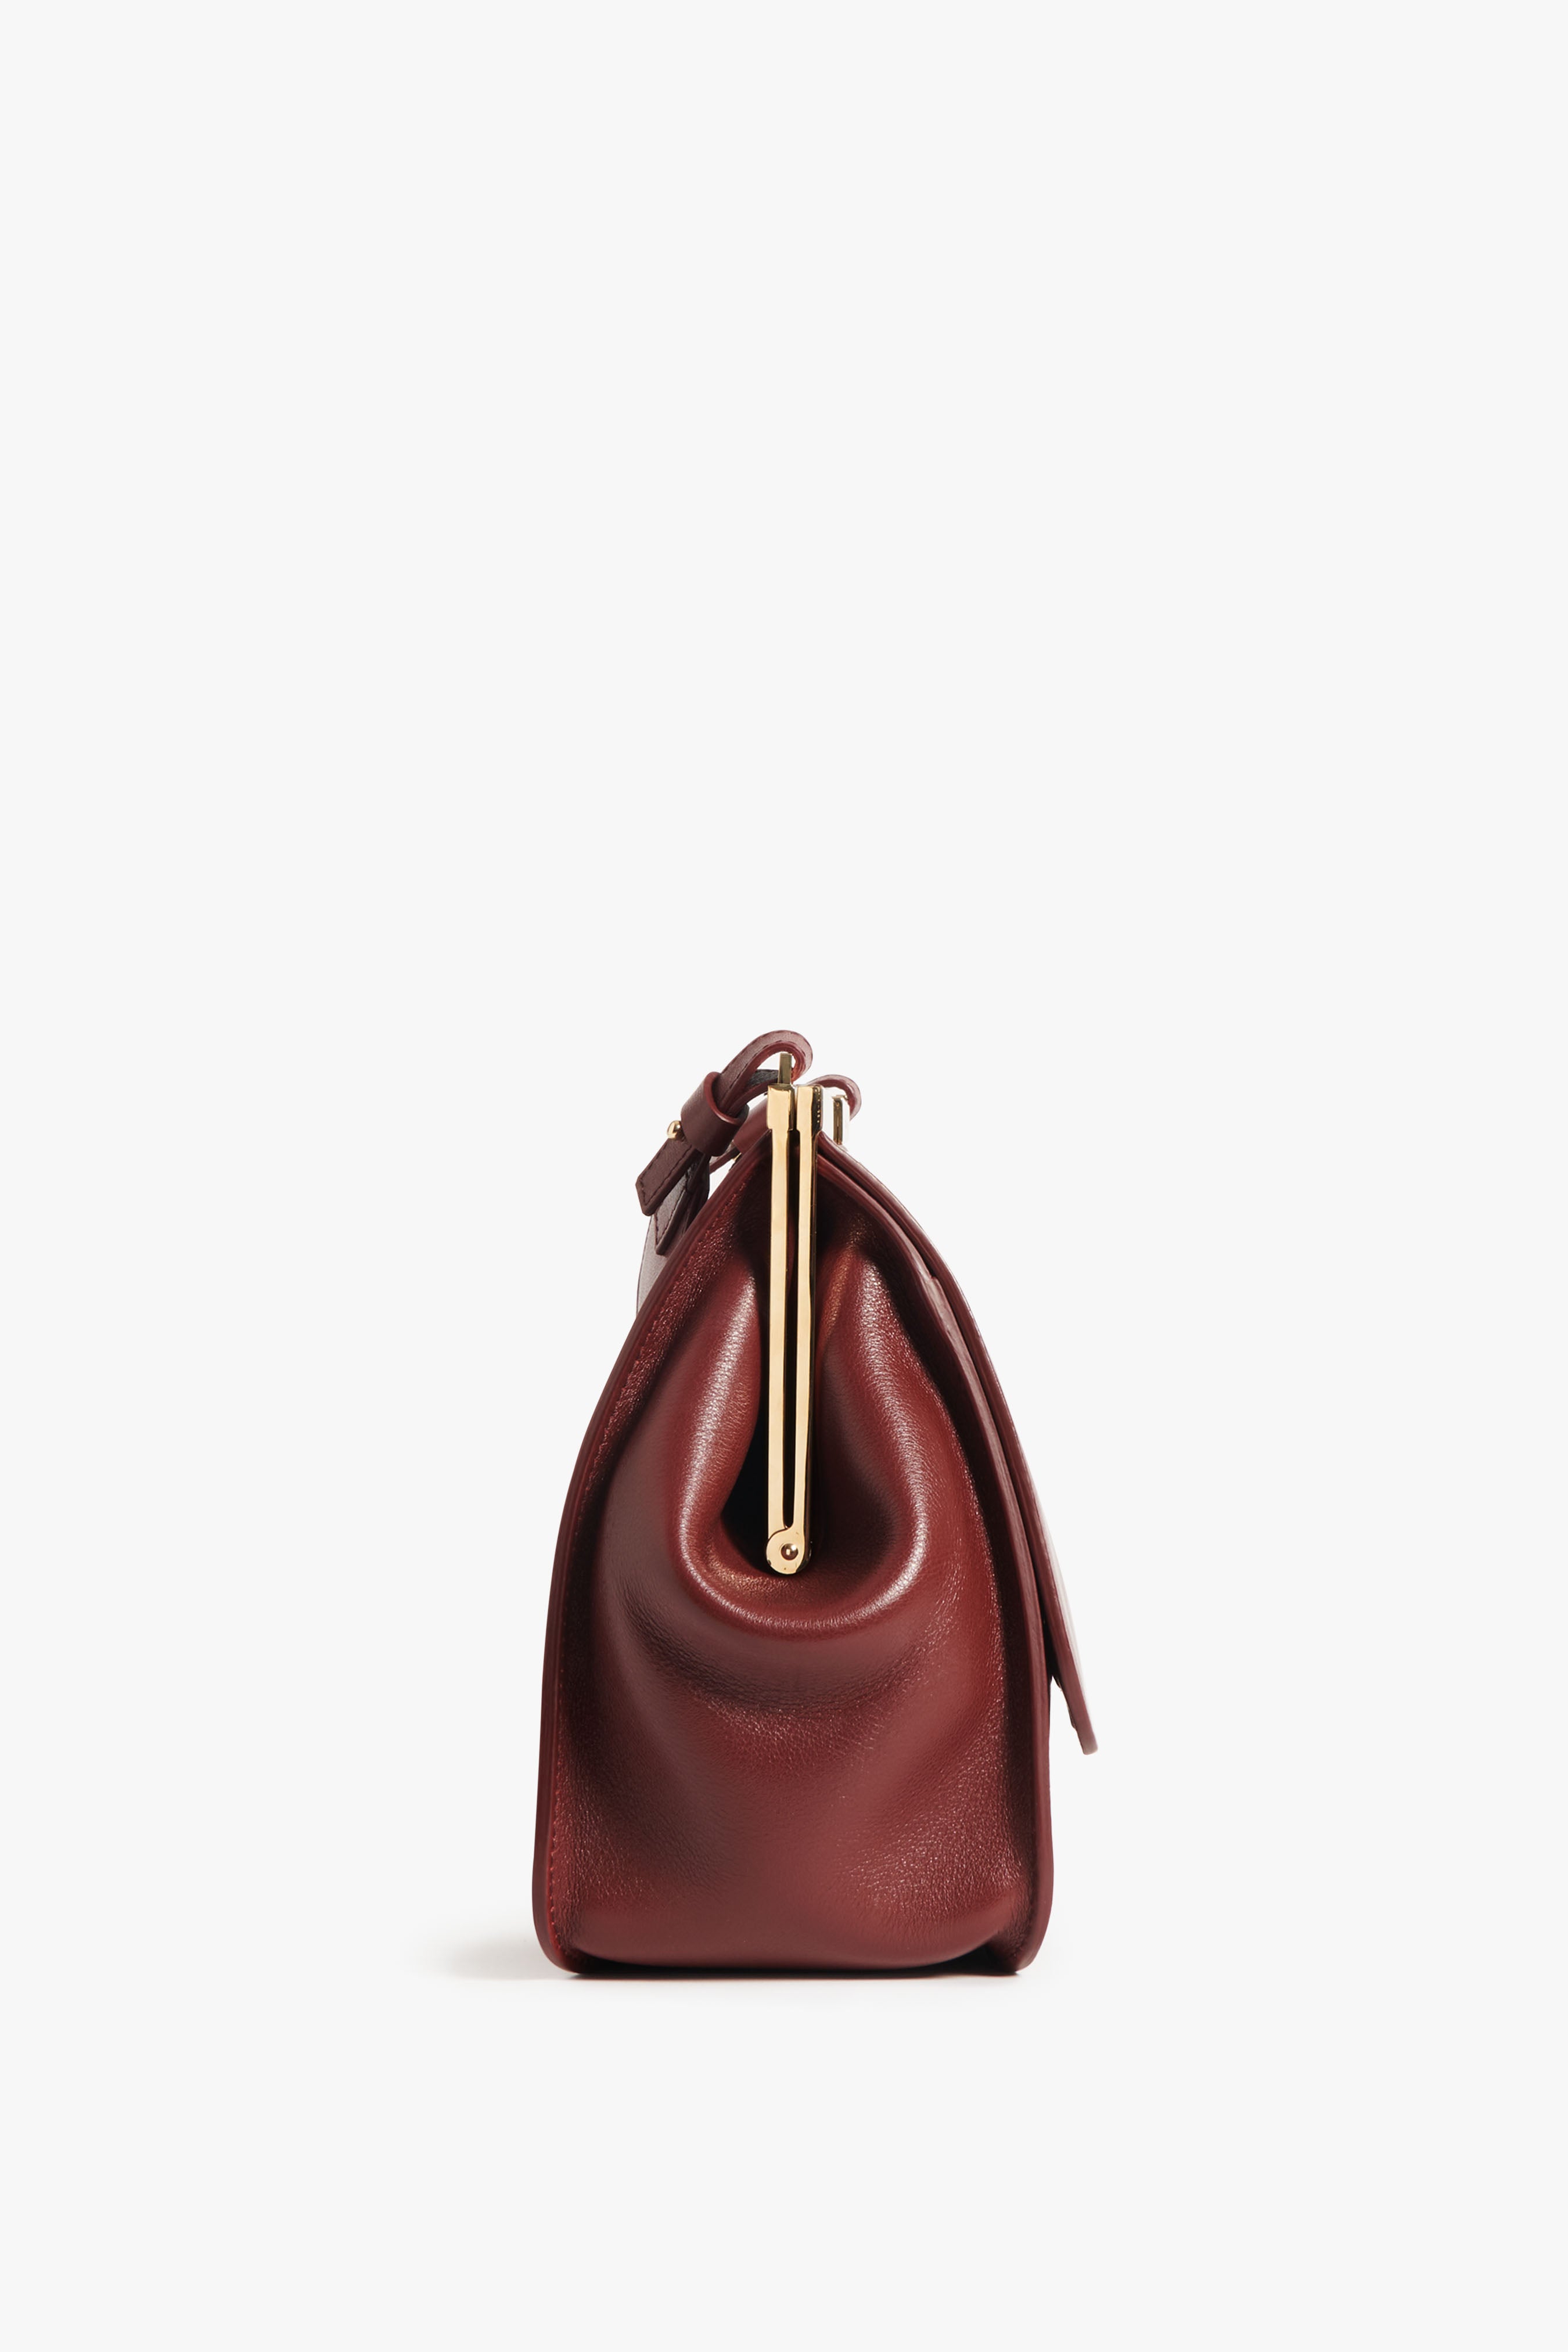 Burgundy Crossbody Leather Handbag, Personalised Camera Bag, Box Handbag Merlot, Box Tassel Handbag Burgundy, Name Handbag Red, Initial Bag